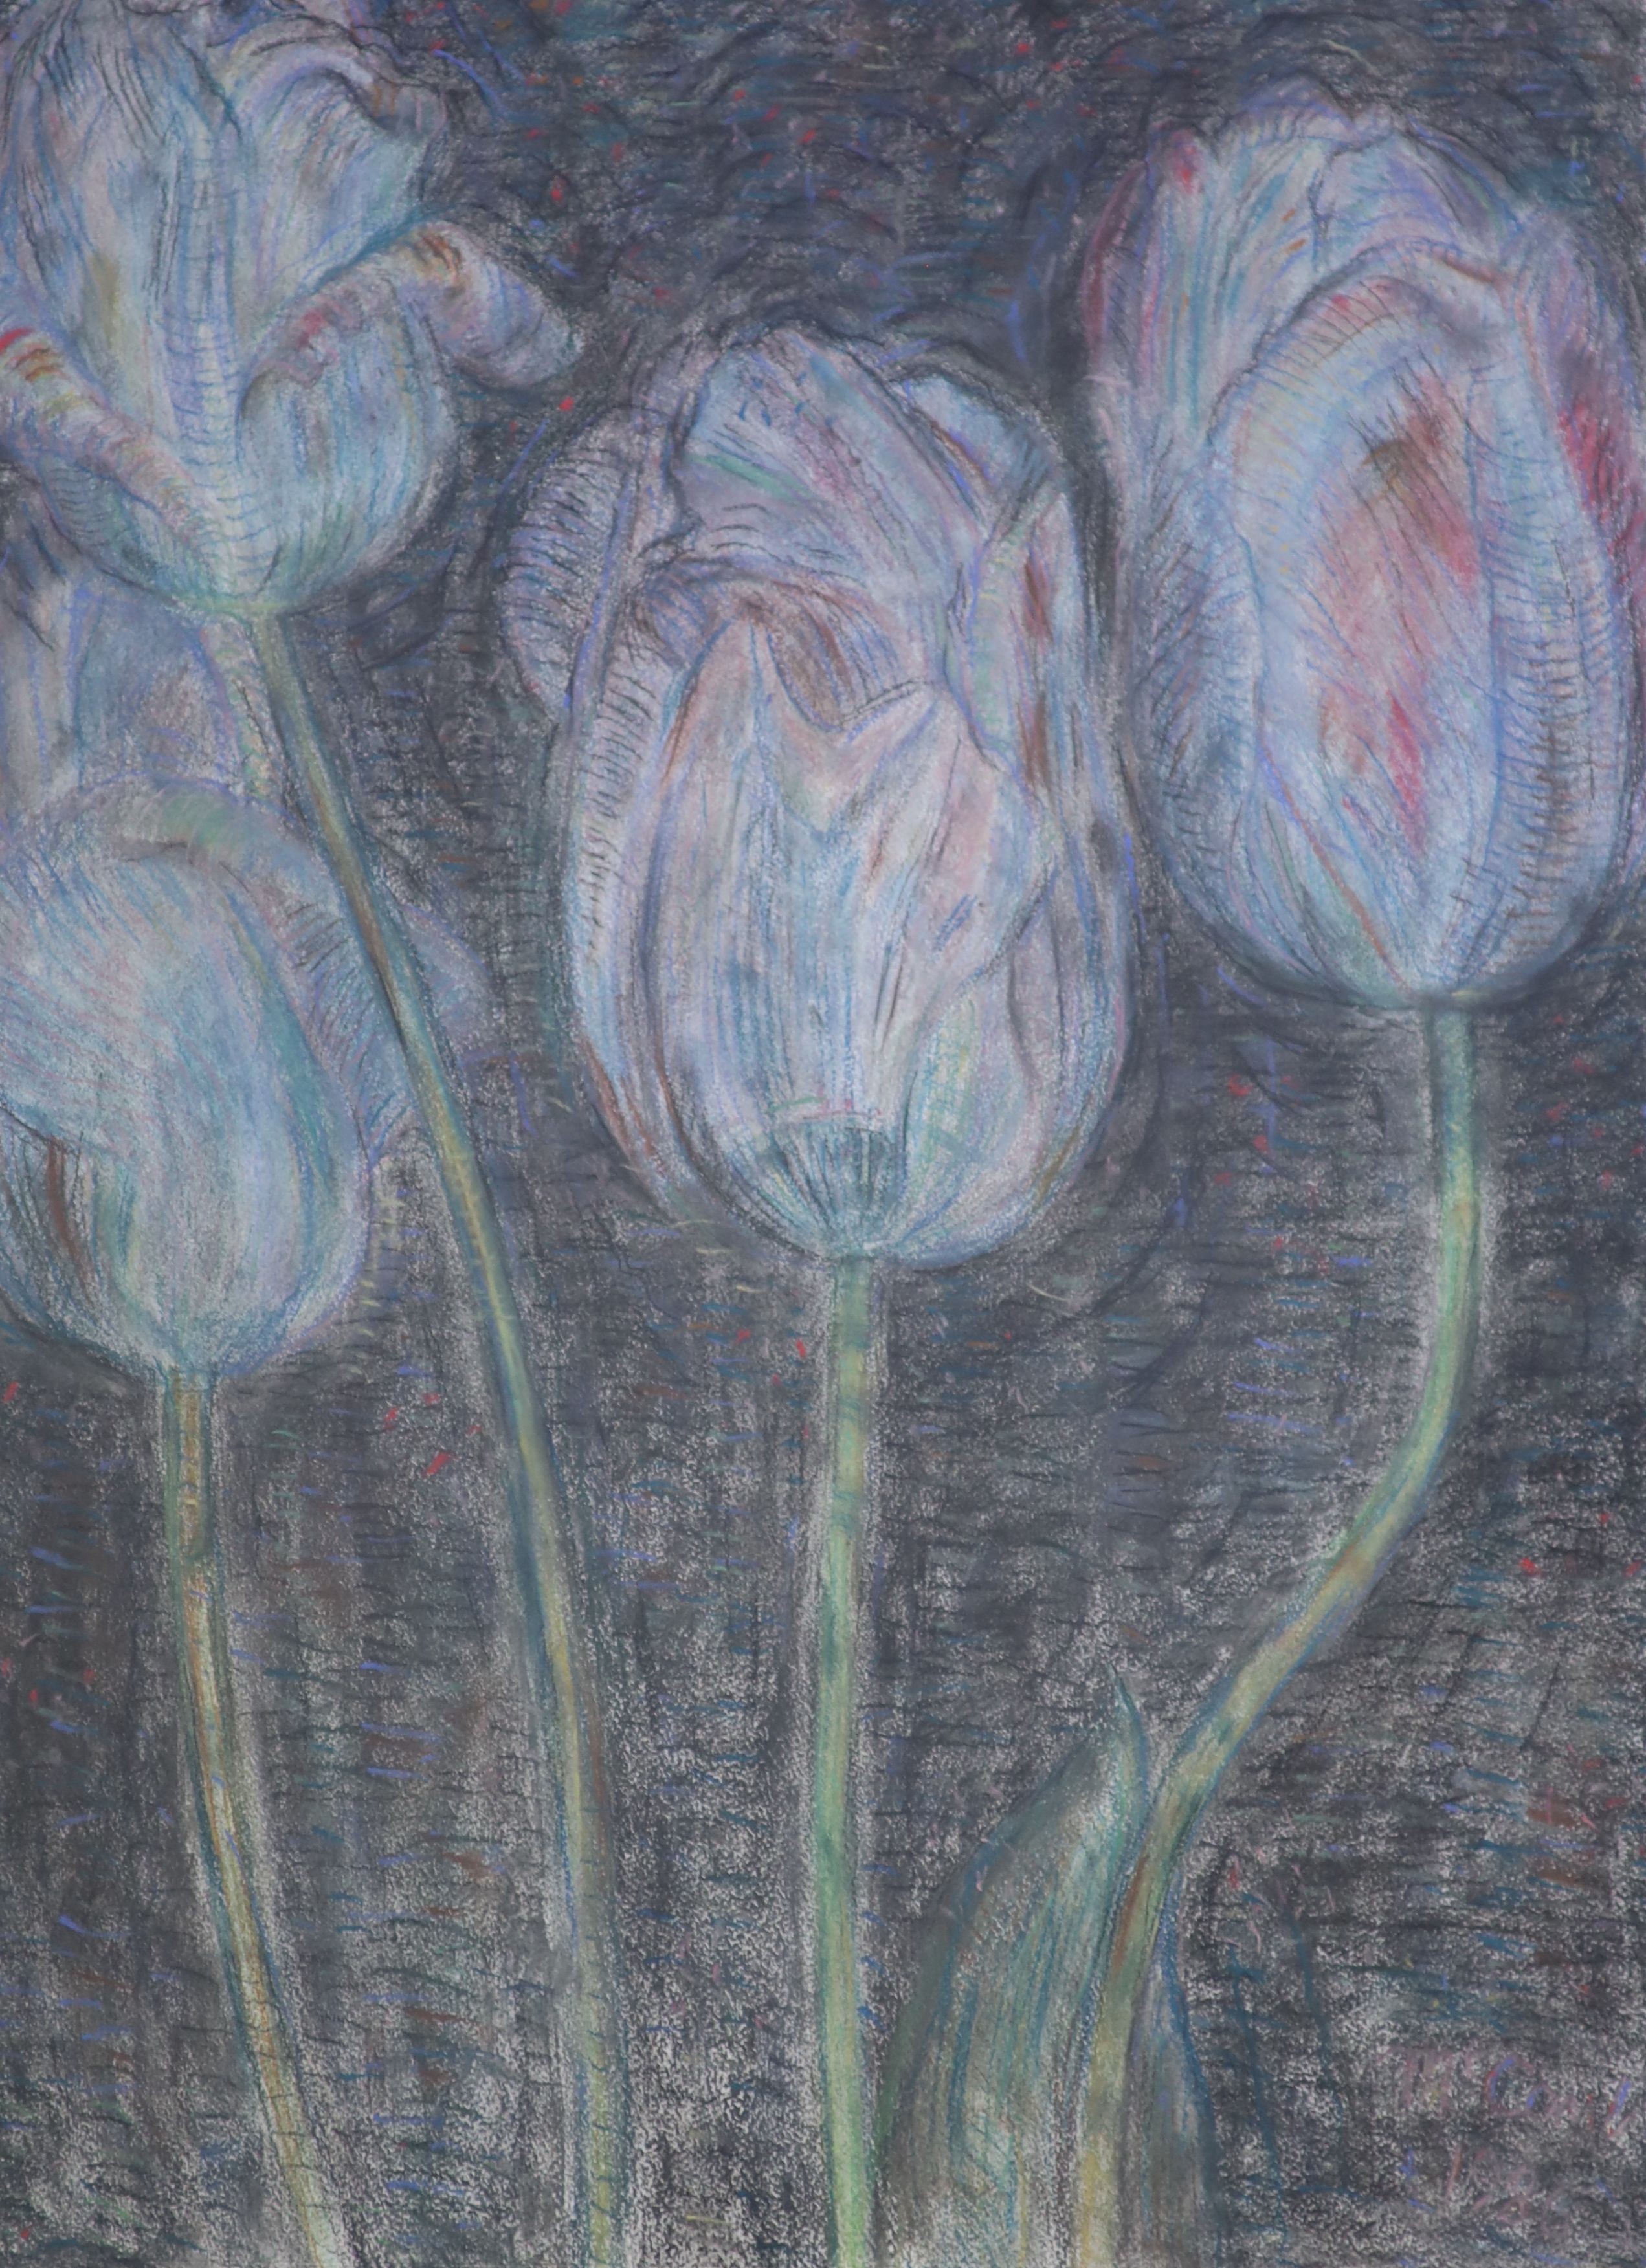 Leonard Mccomb (1930-2018), 'May Tulips', Pastel on Whatman paper, 76 x 56cm.                                                                                                                                               